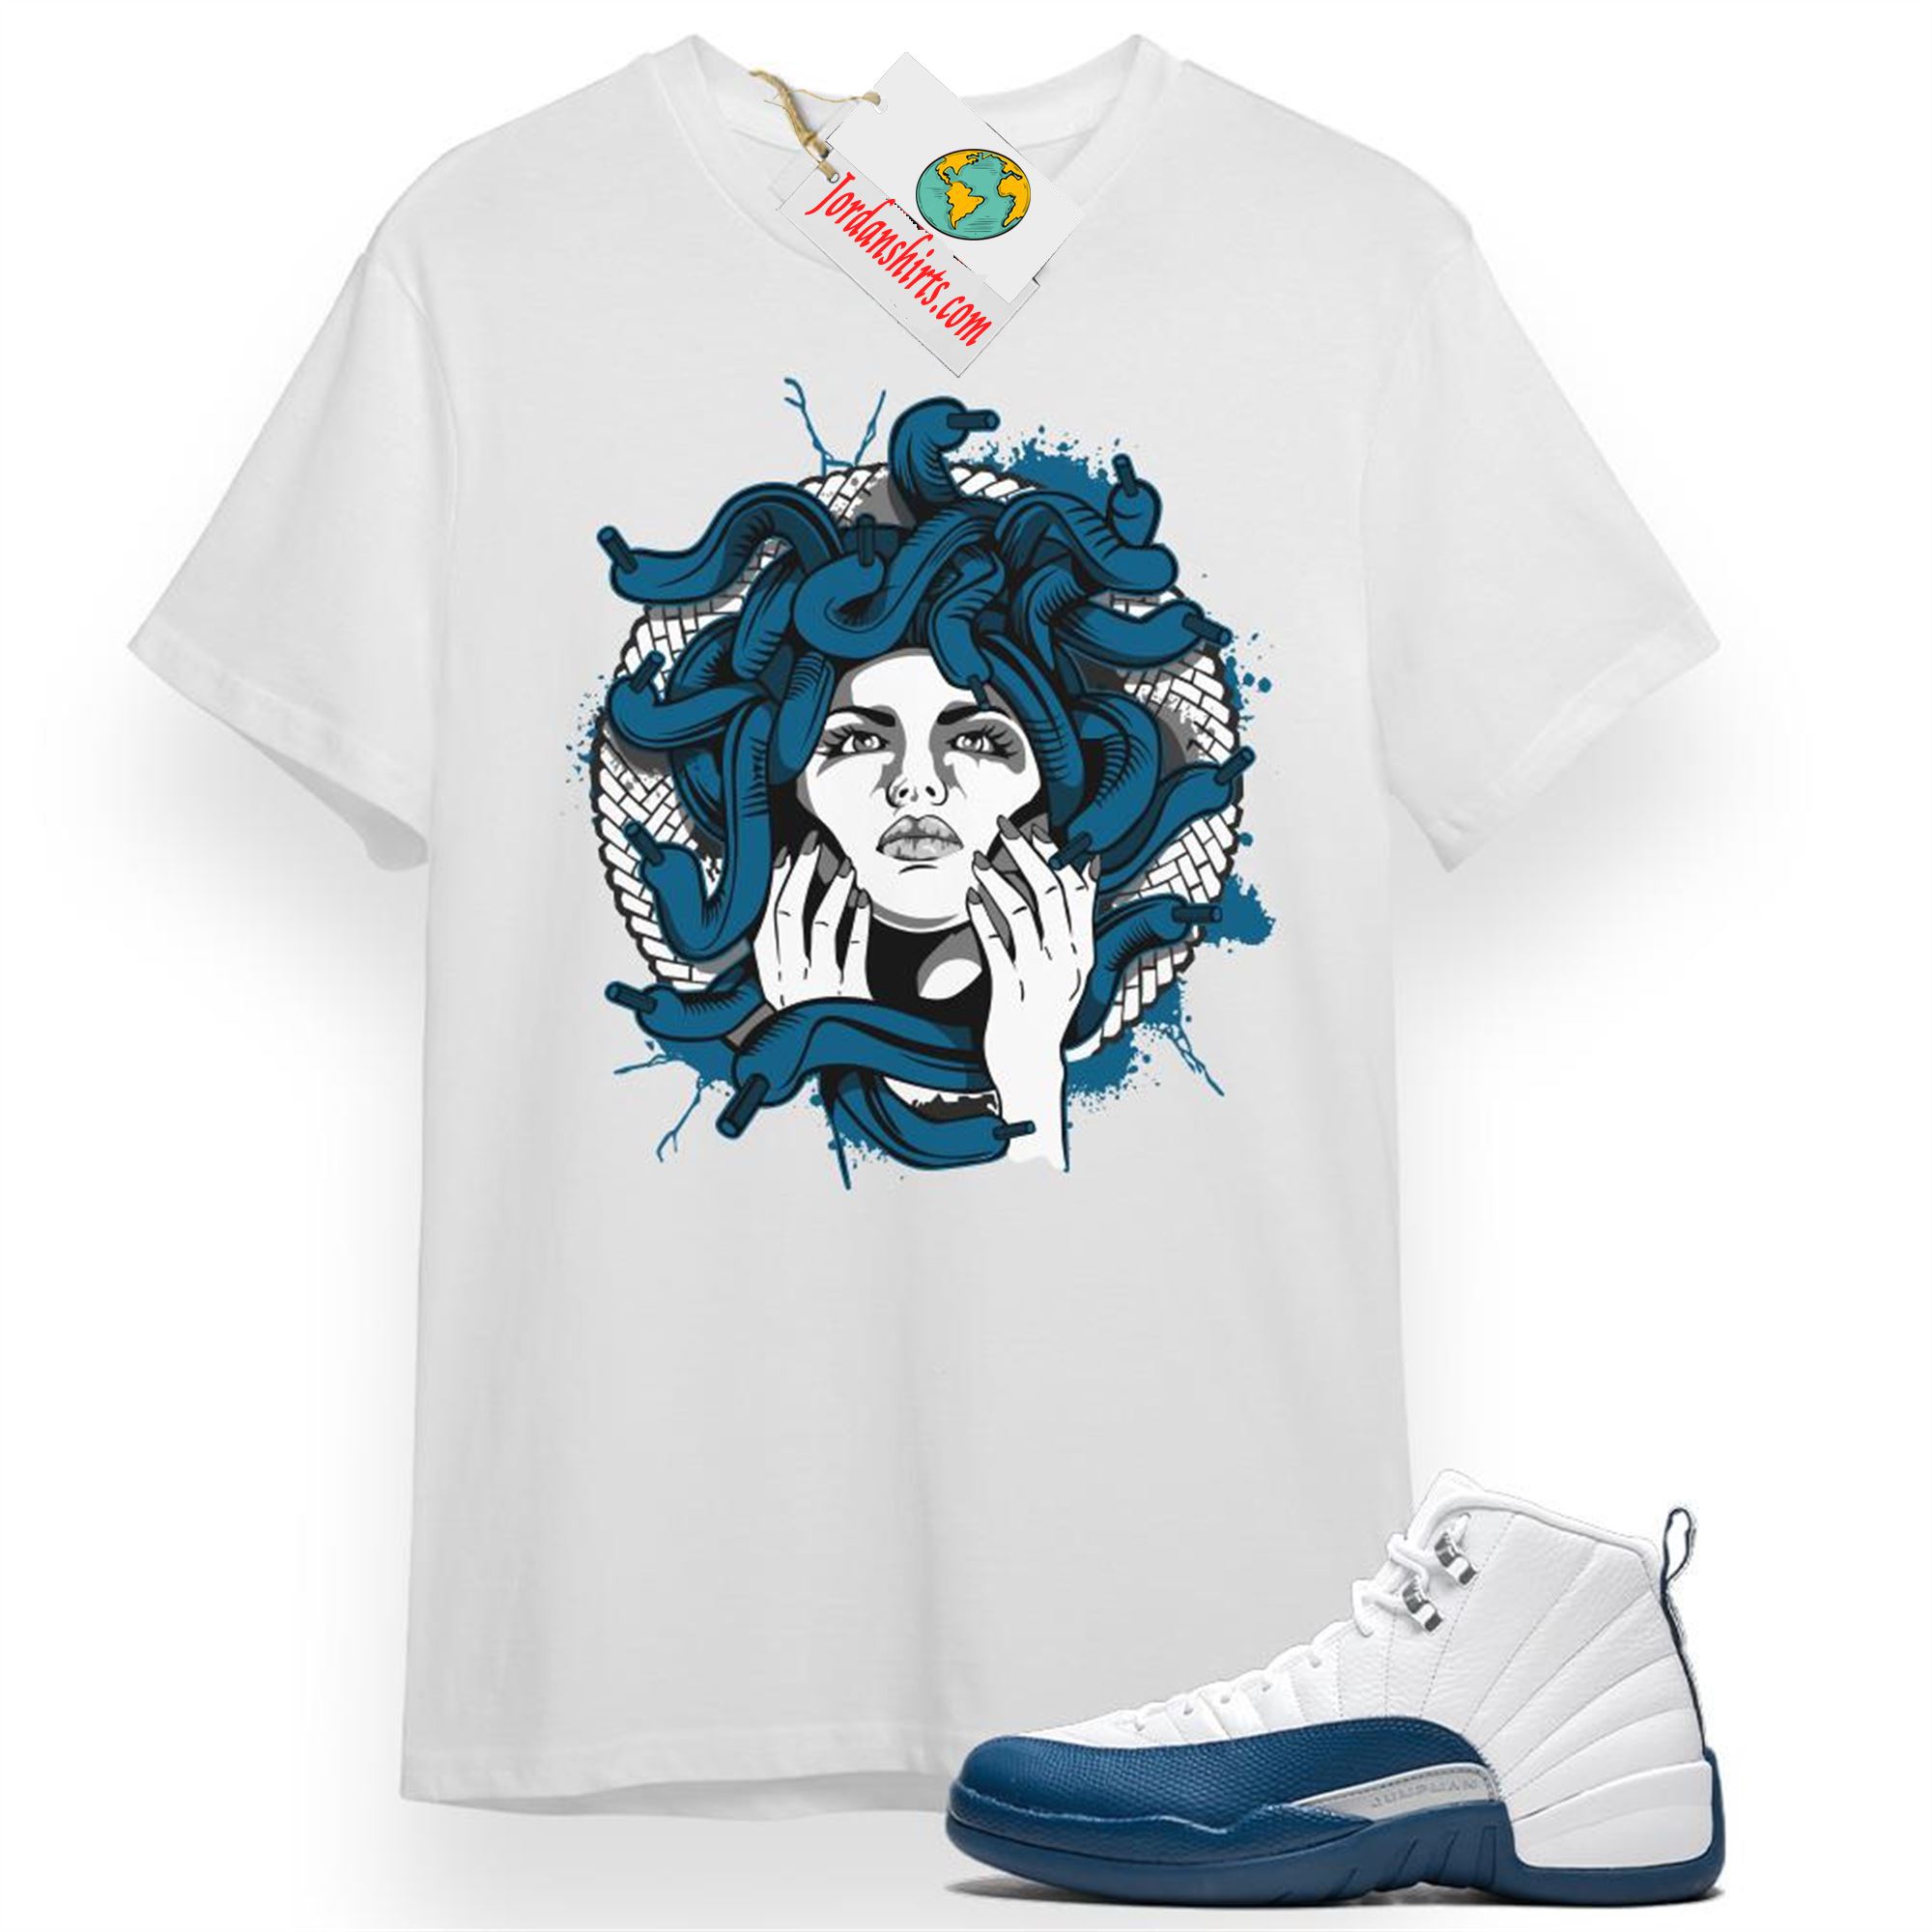 Jordan 12 Shirt, Medusa White T-shirt Air Jordan 12 French Blue 12s Size Up To 5xl